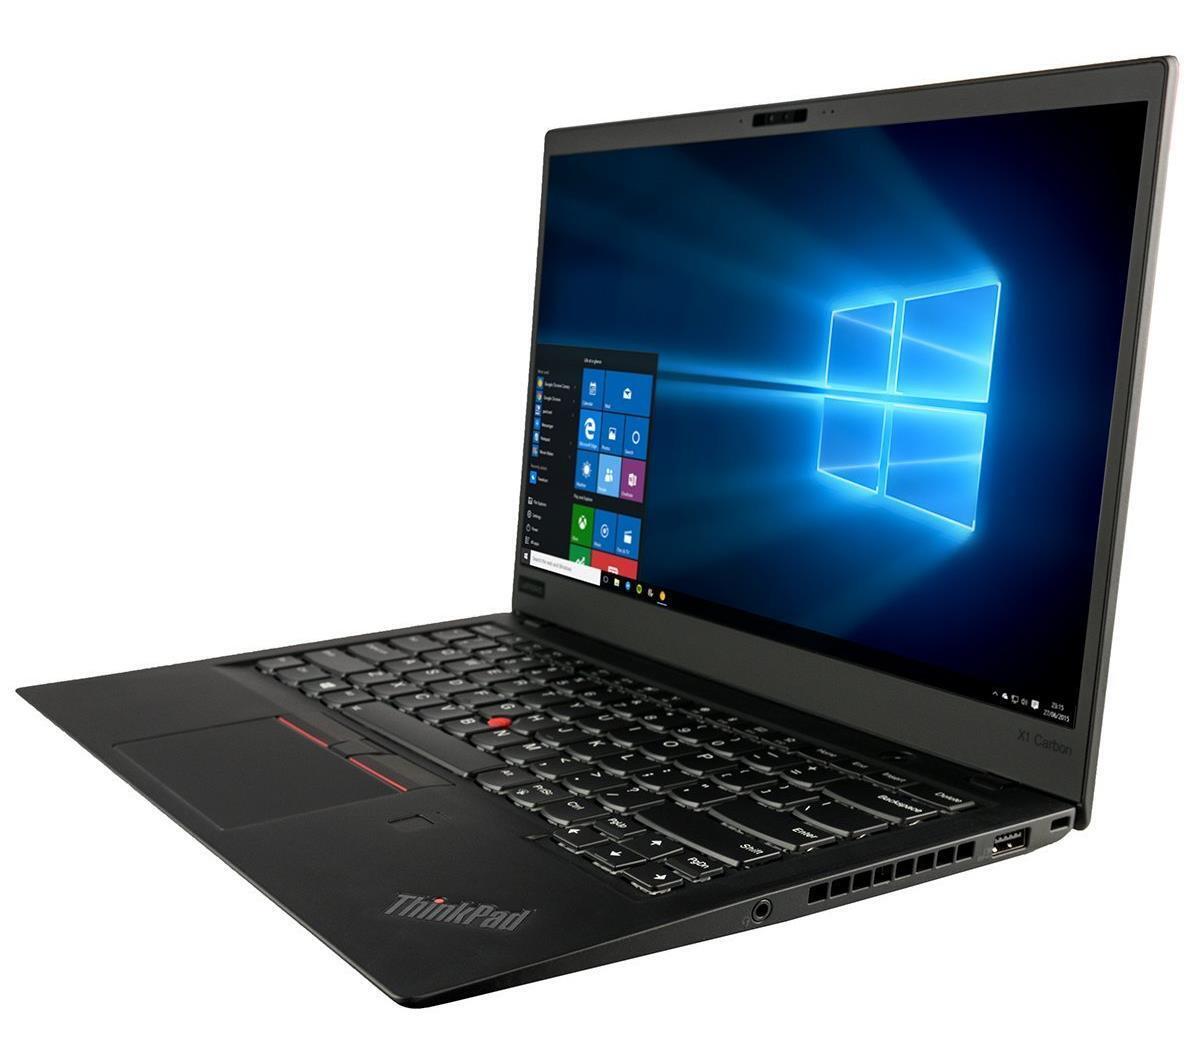 Lenovo ThinkPad X1 Carbon 4th Gen i7 6600u 2.60Ghz 8GB 256GB SSD FHD Win 10 Pro - B Grade Image 2